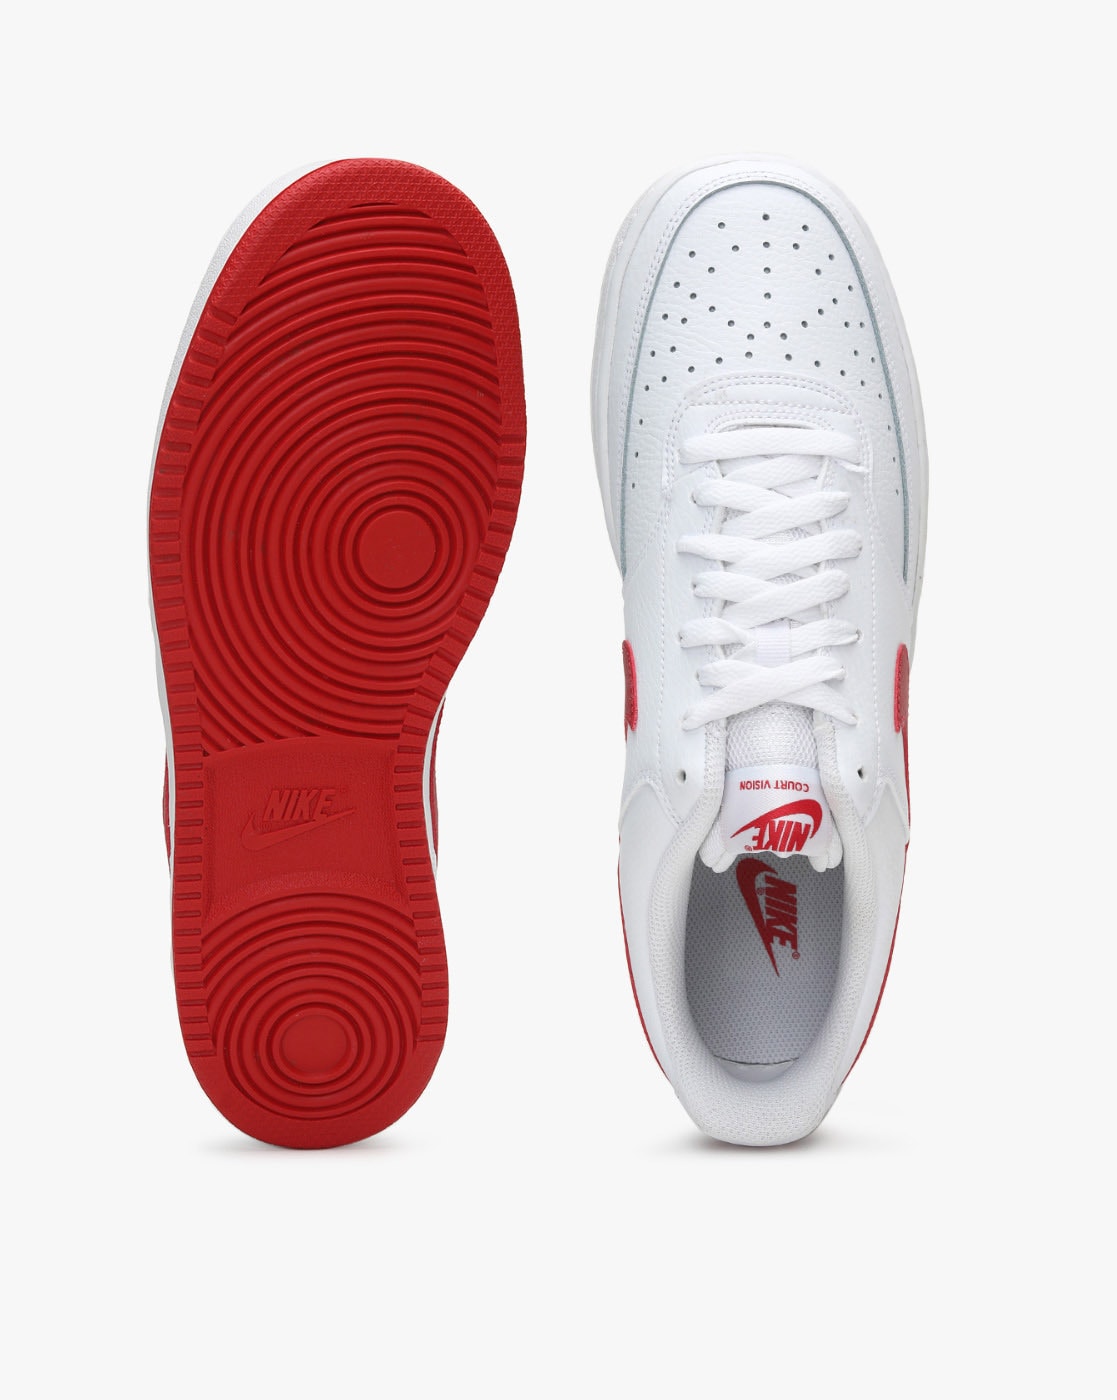 Nike Shoes, Air Max, Basketball Shoes | Shoe Carnival